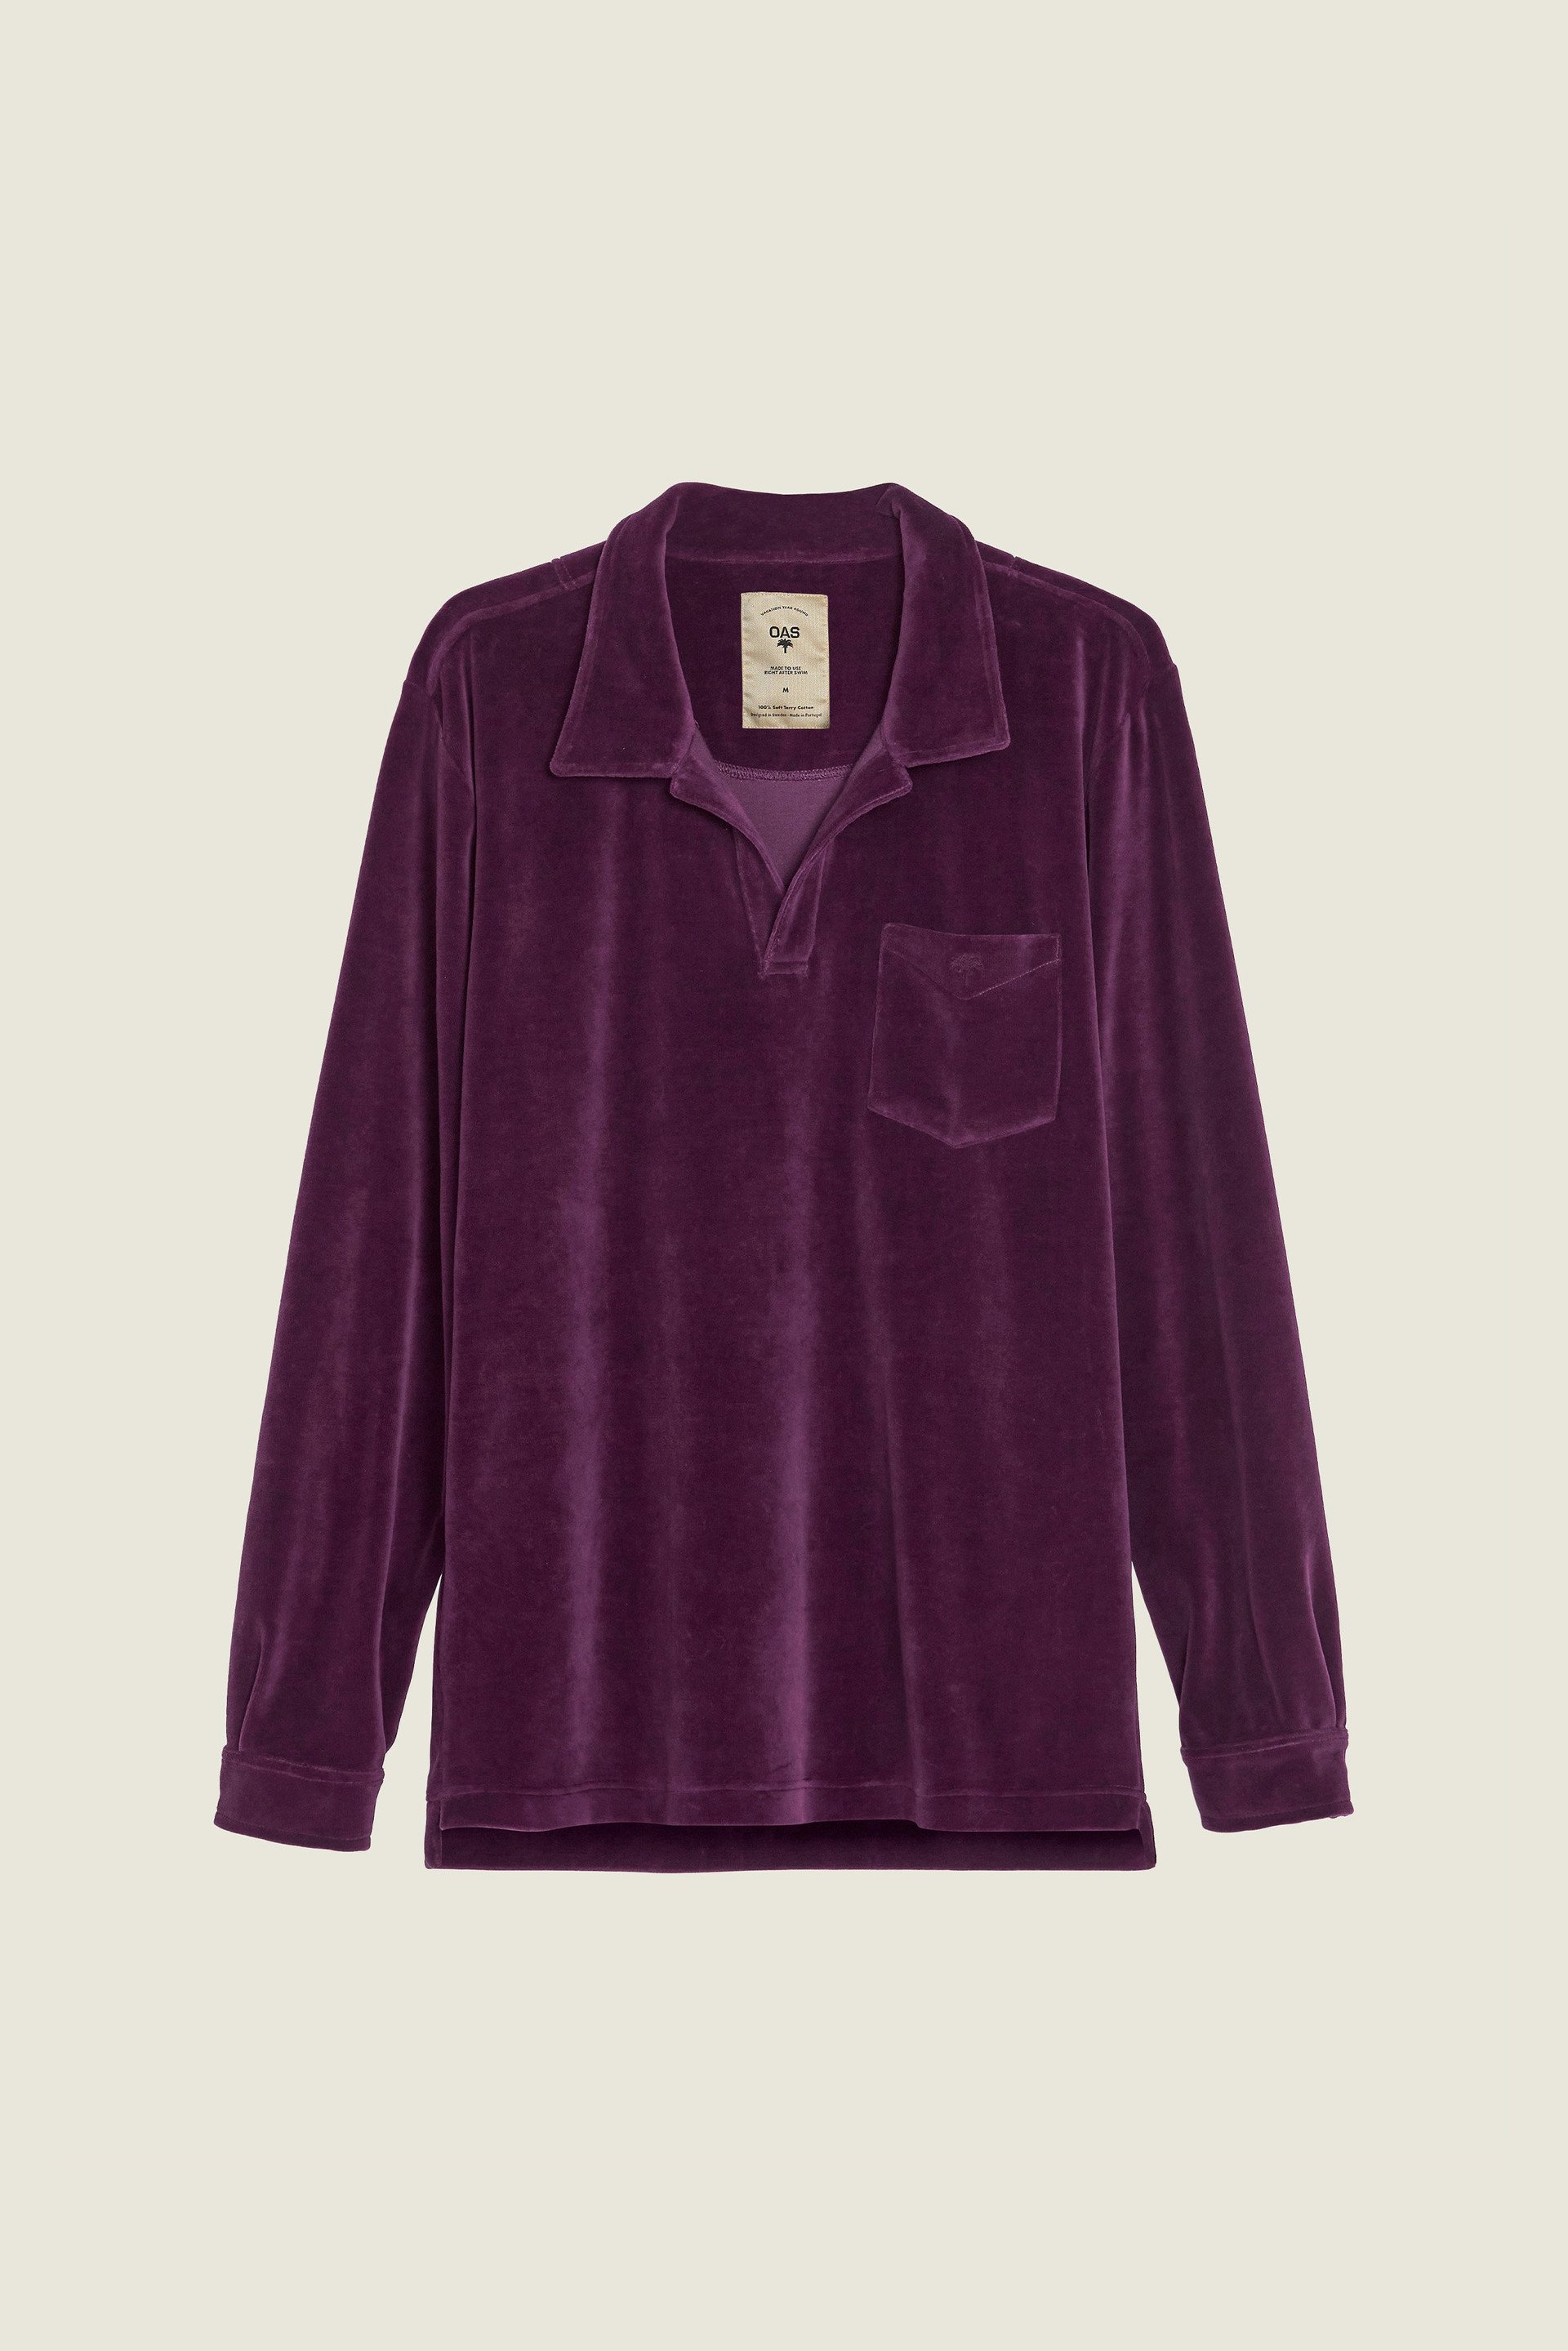 Dandy Purple Velour Långärmad-skjorta